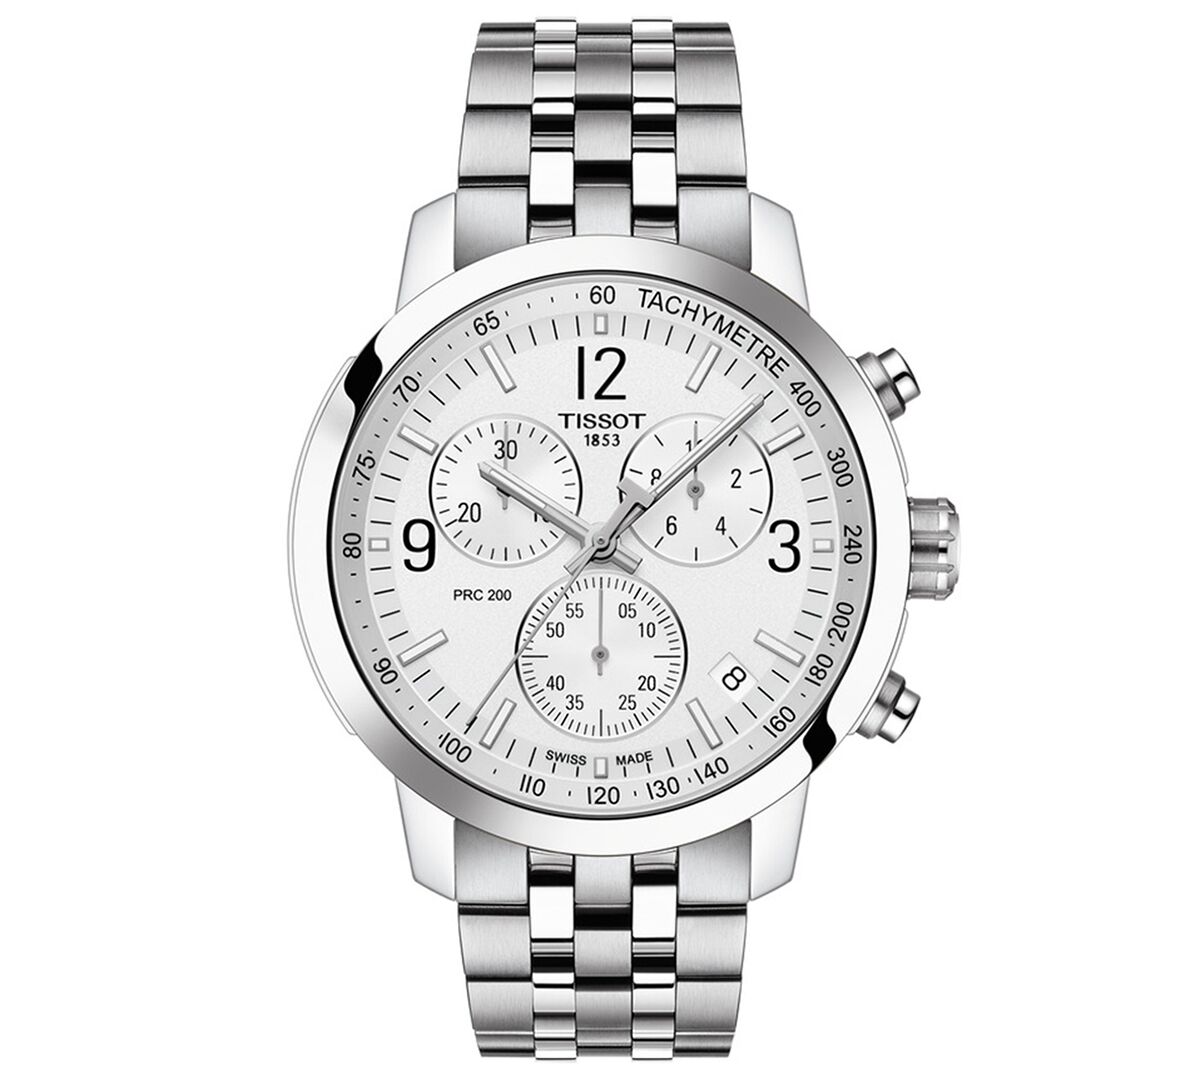 Tissot Men's Swiss Chronograph Prc 200 Stainless Steel Bracelet Watch 43mm - Silver